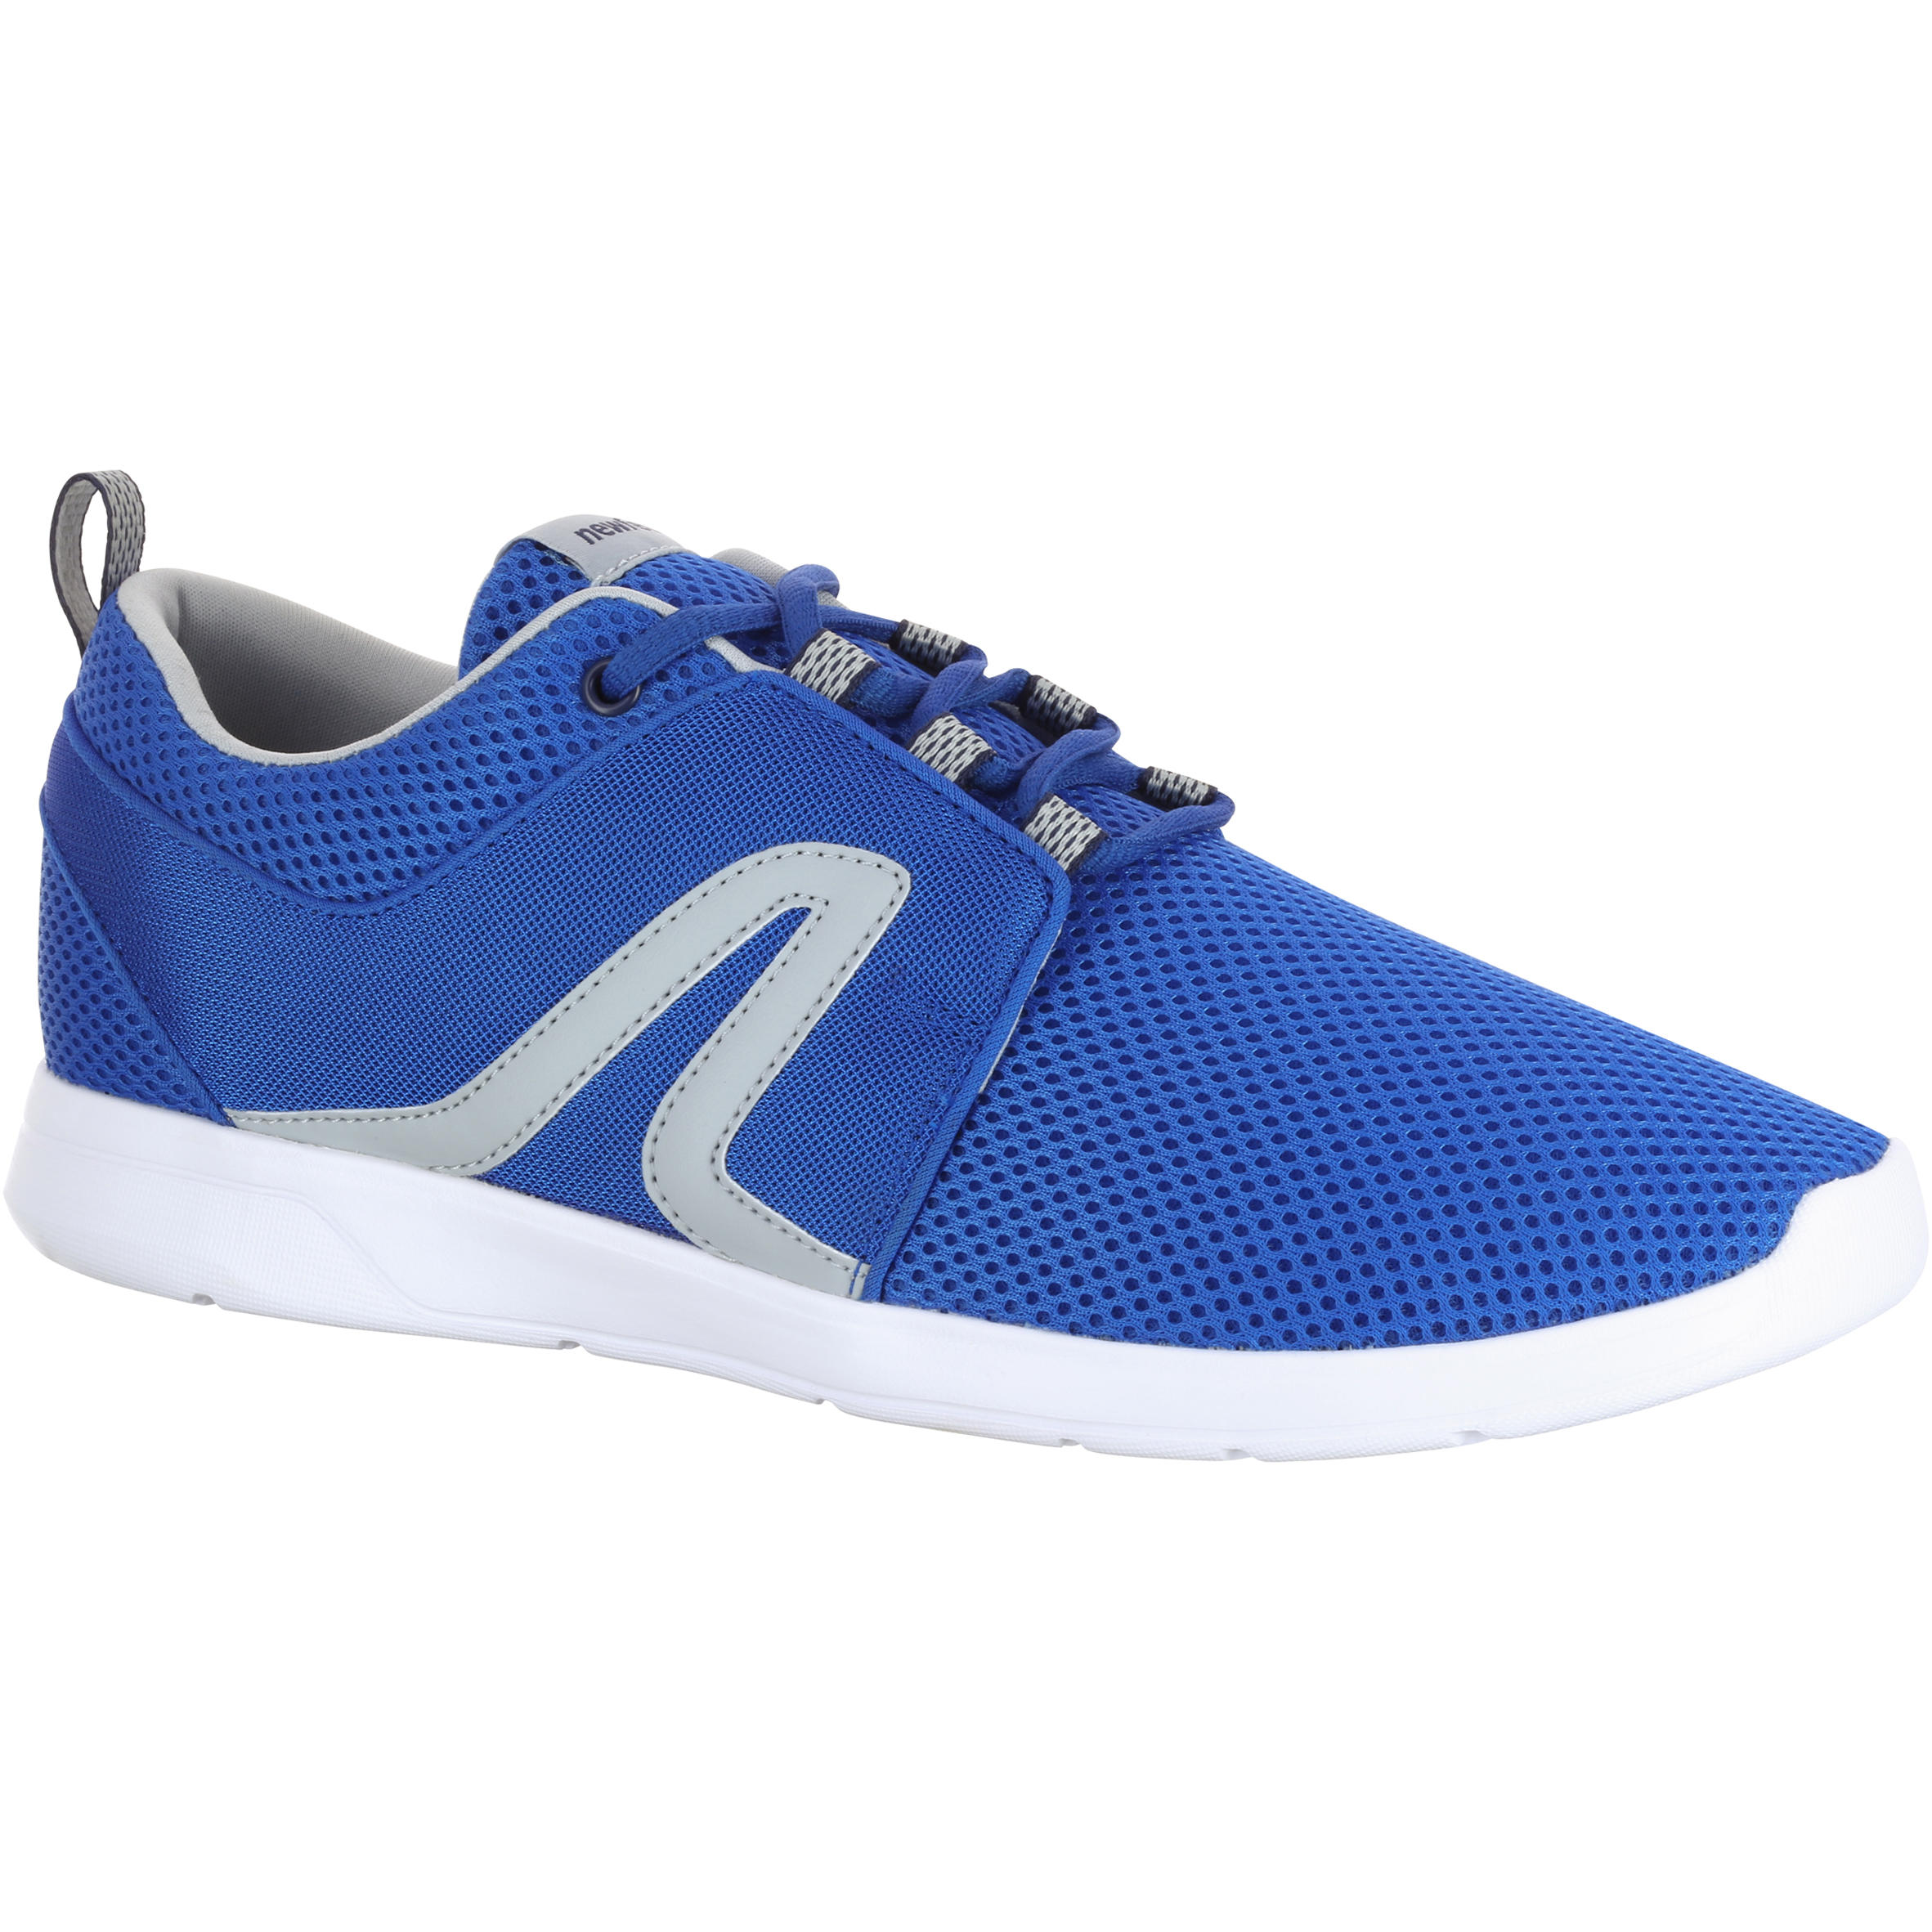 NEWFEEL Soft 140 Mesh Men's Fitness Walking Shoes - Blue/Grey